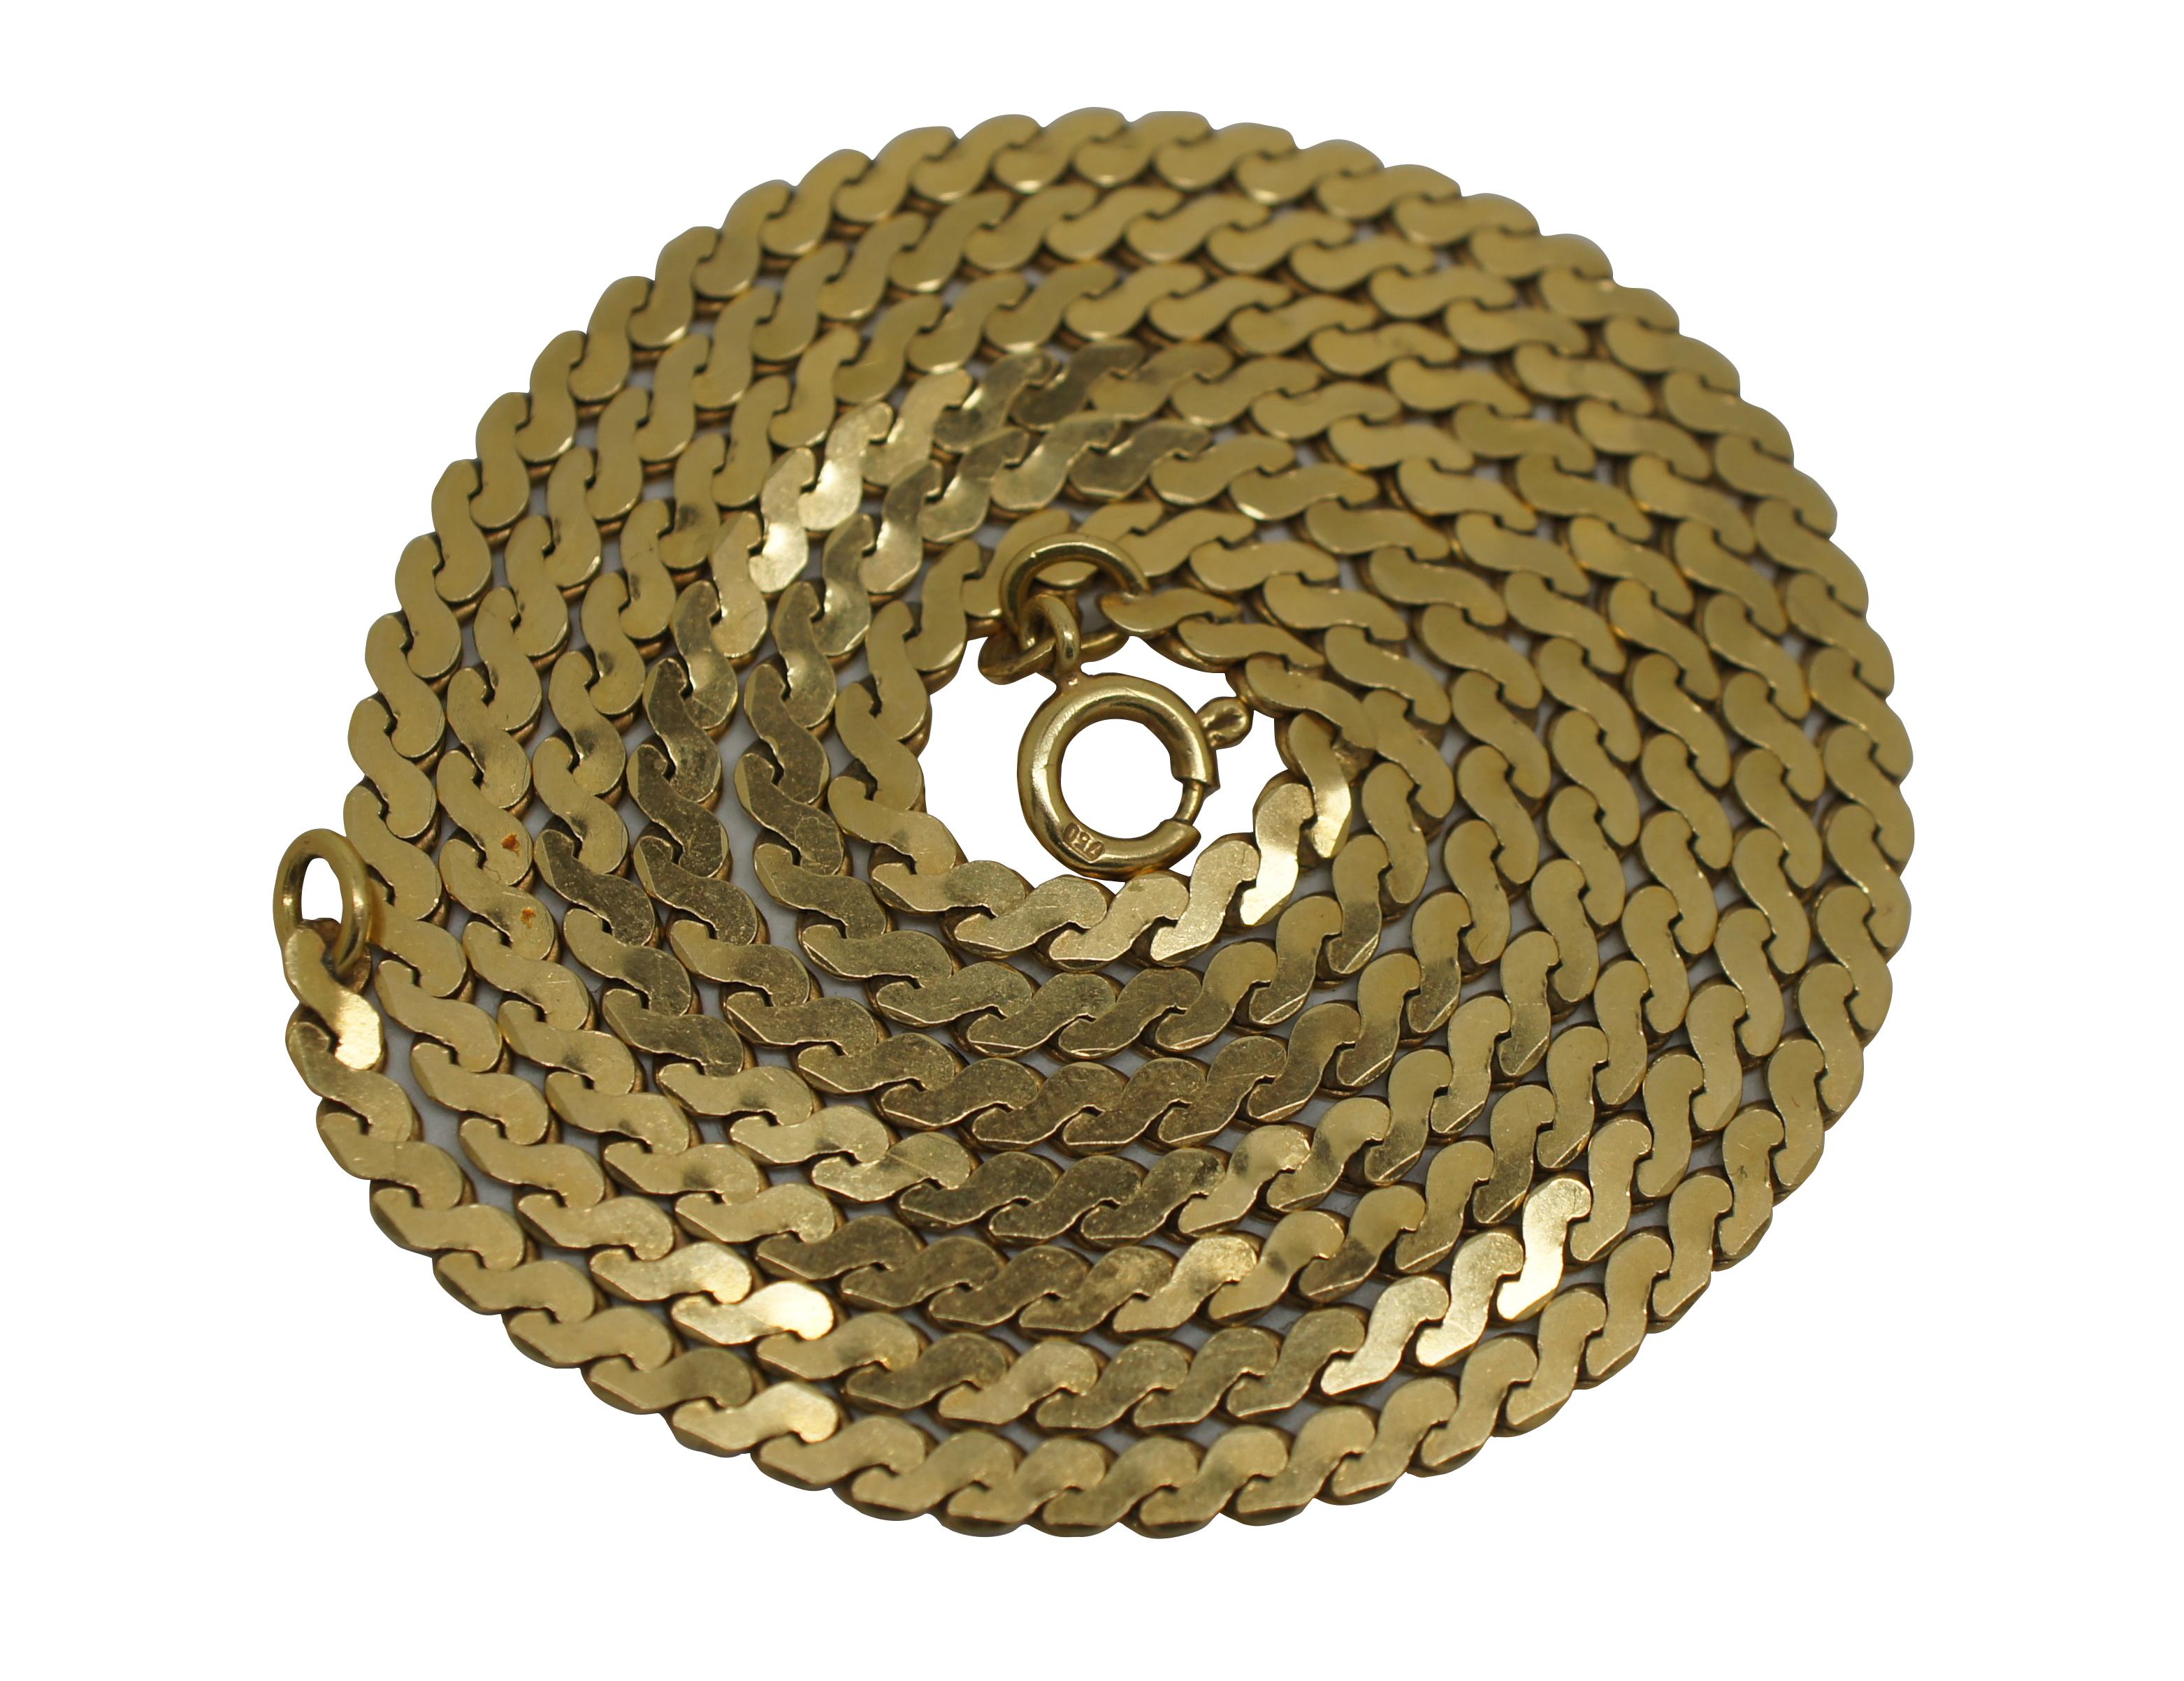 Vintage Giovanni Balestra & Figli 18k / 750 (75% Gold) yellow gold 3mm wide heavy serpentine chain necklace with spring ring clasp. Made in Vicenza, Italy. 

GIOVANNI BALESTRA & FIGLI
Hallmark(s):  13 VI, 